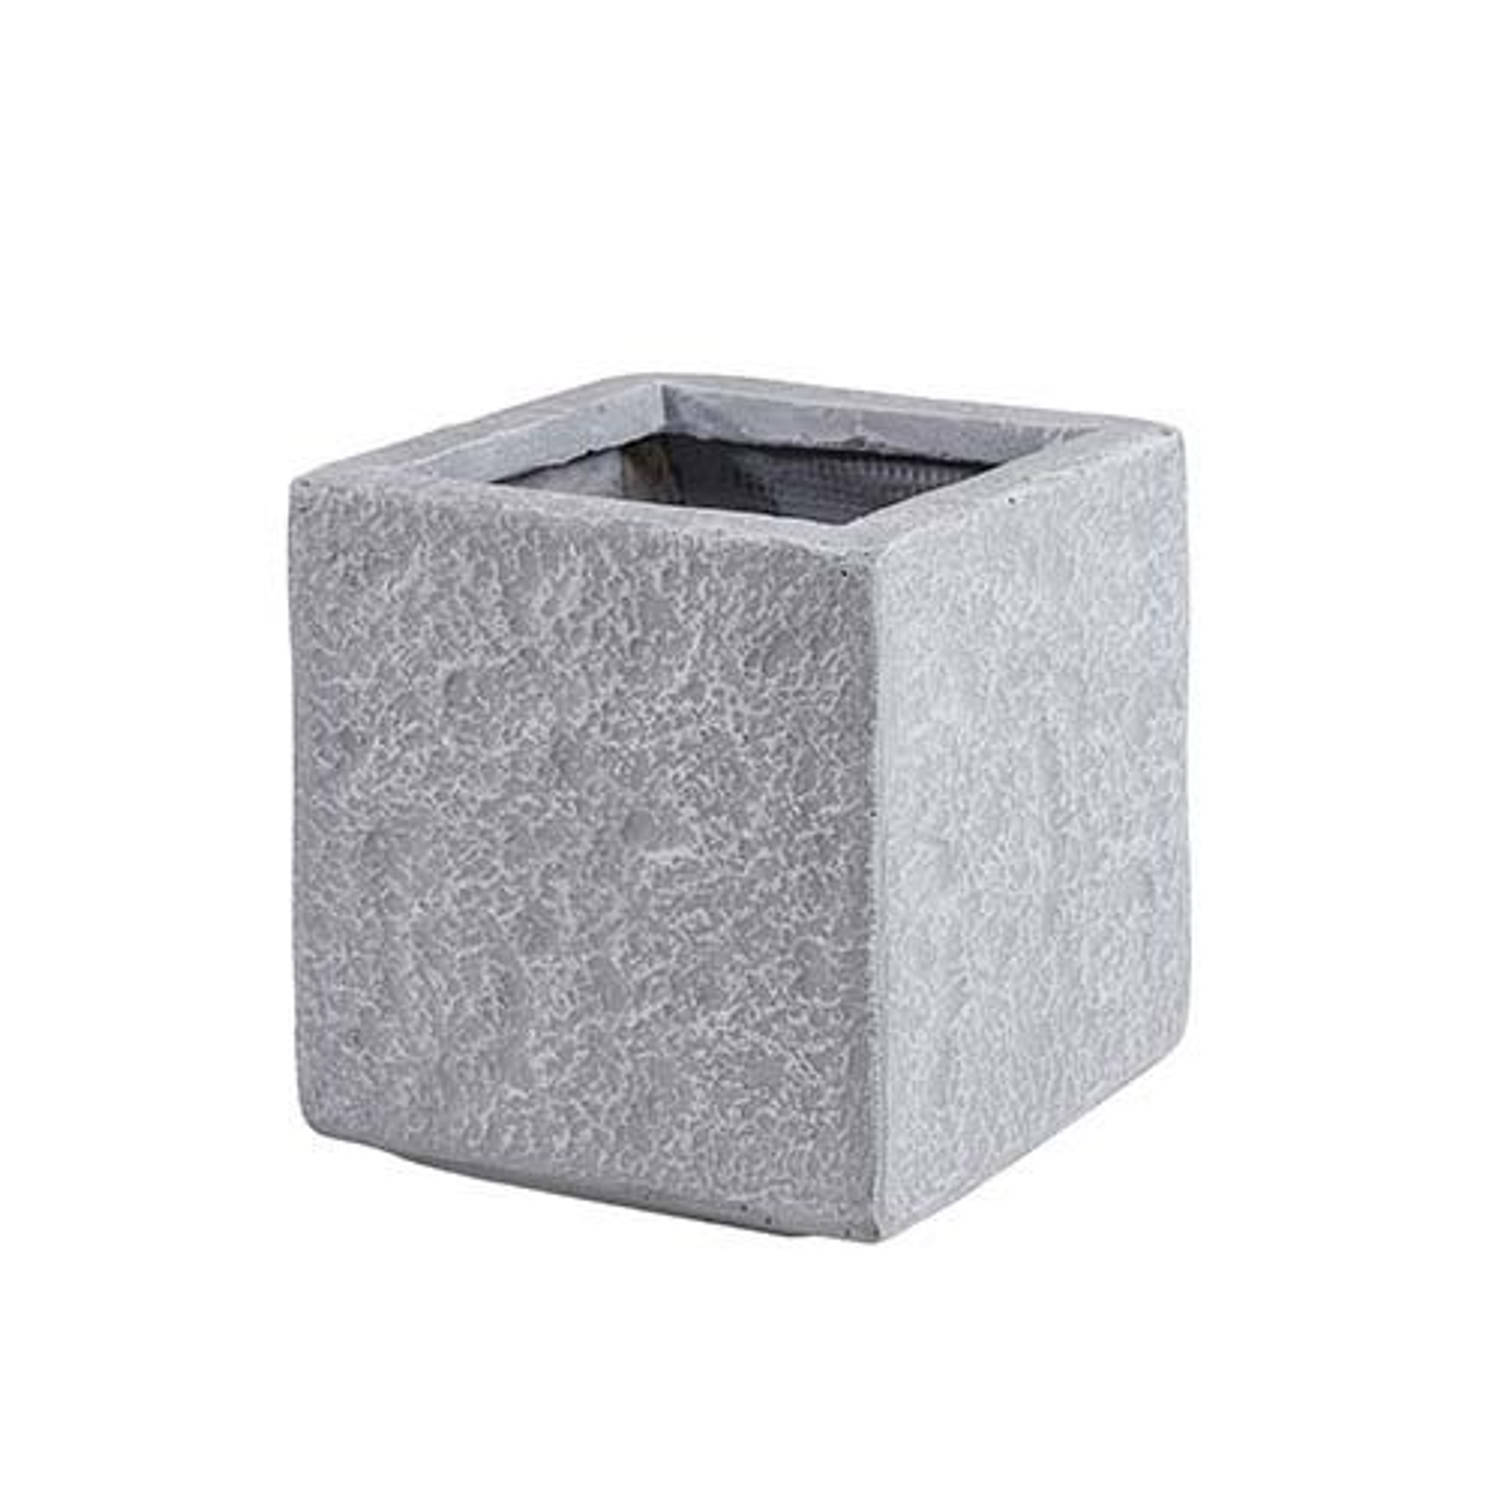 E'lite - Bloempot reykjavik vierkant cement 32x30 cm